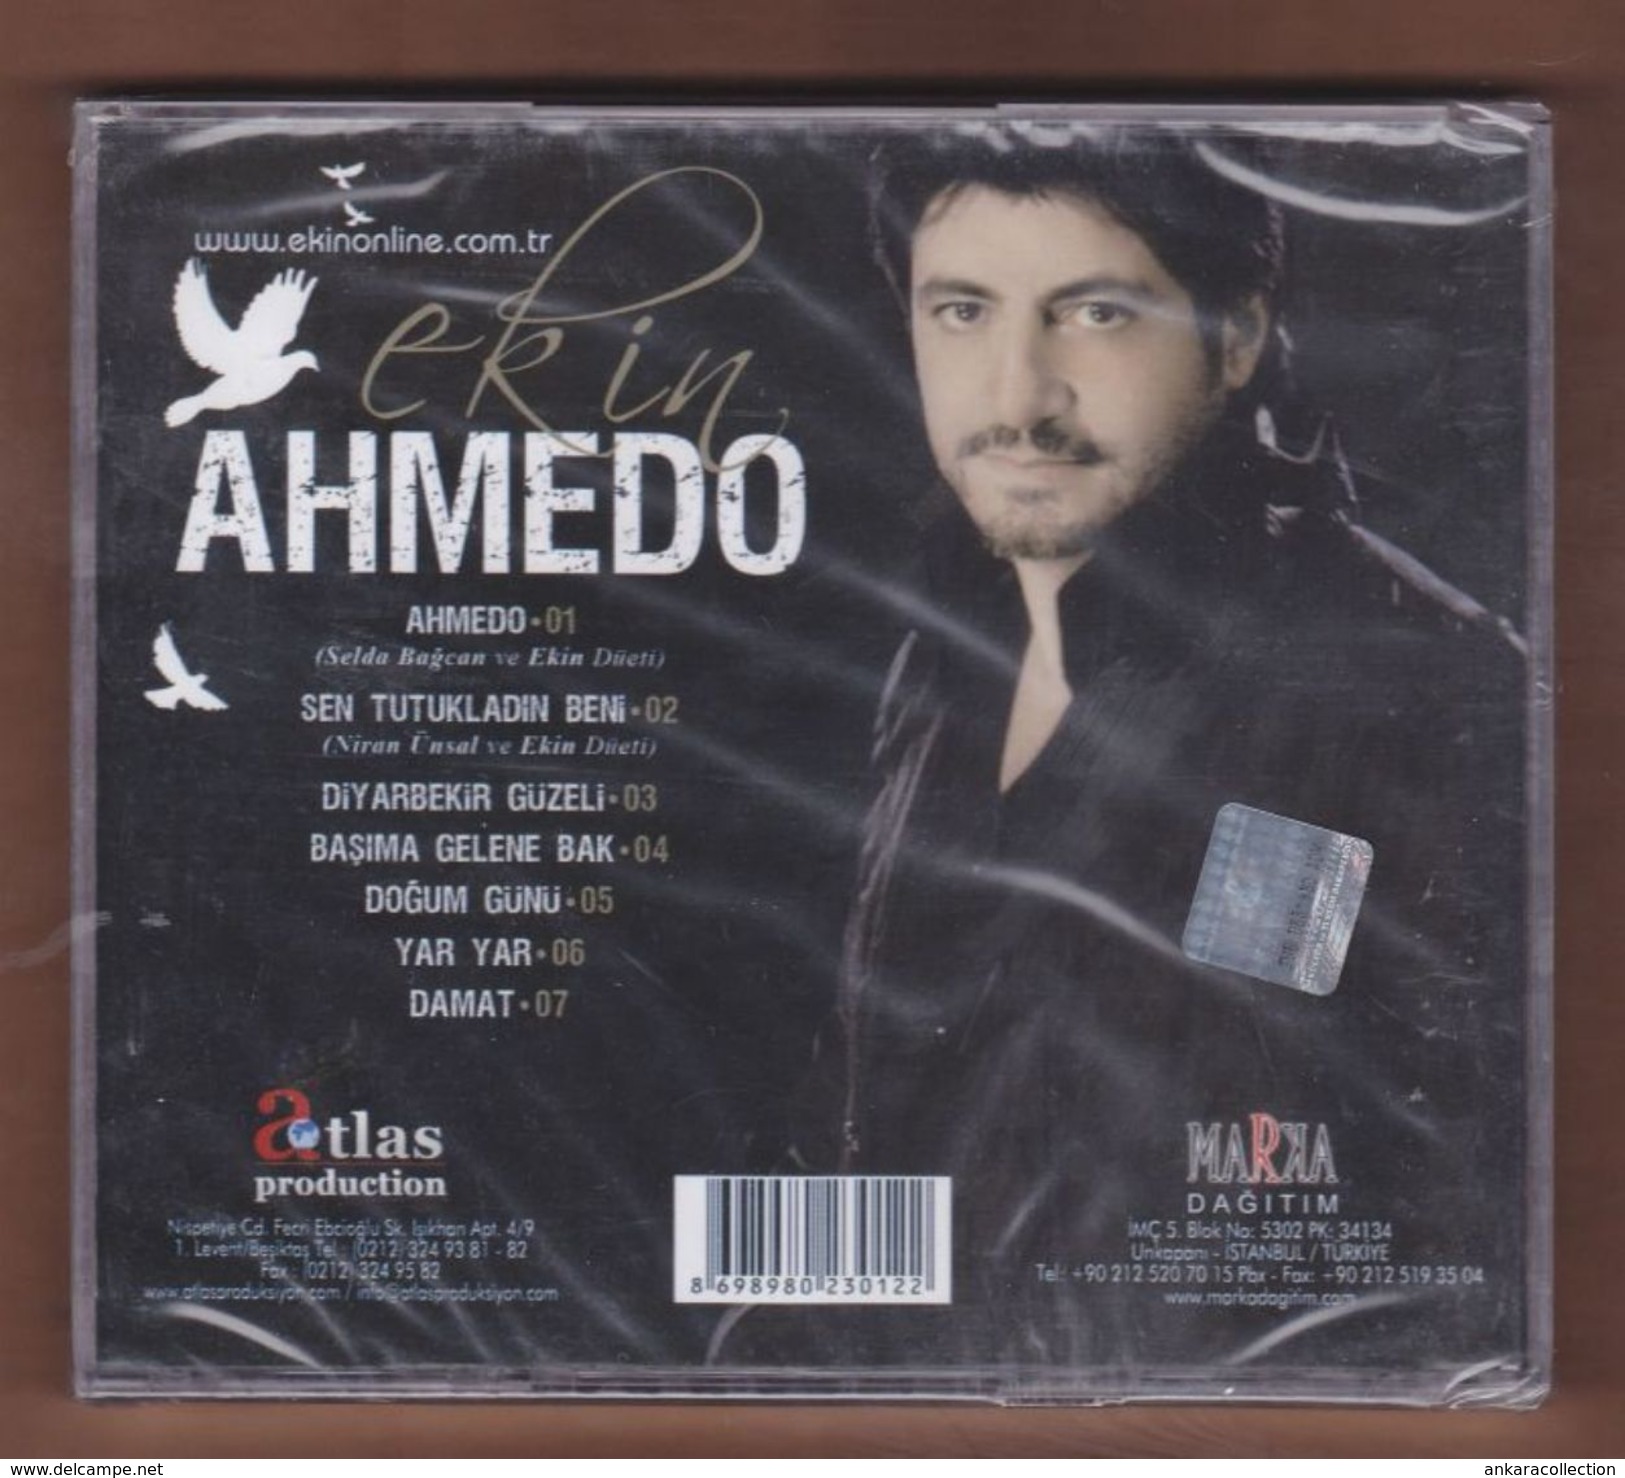 AC - EKIN AHMEDO SELDA BAGCAN ILE DUET BRAND NEW TURKISH MUSIC CD - World Music